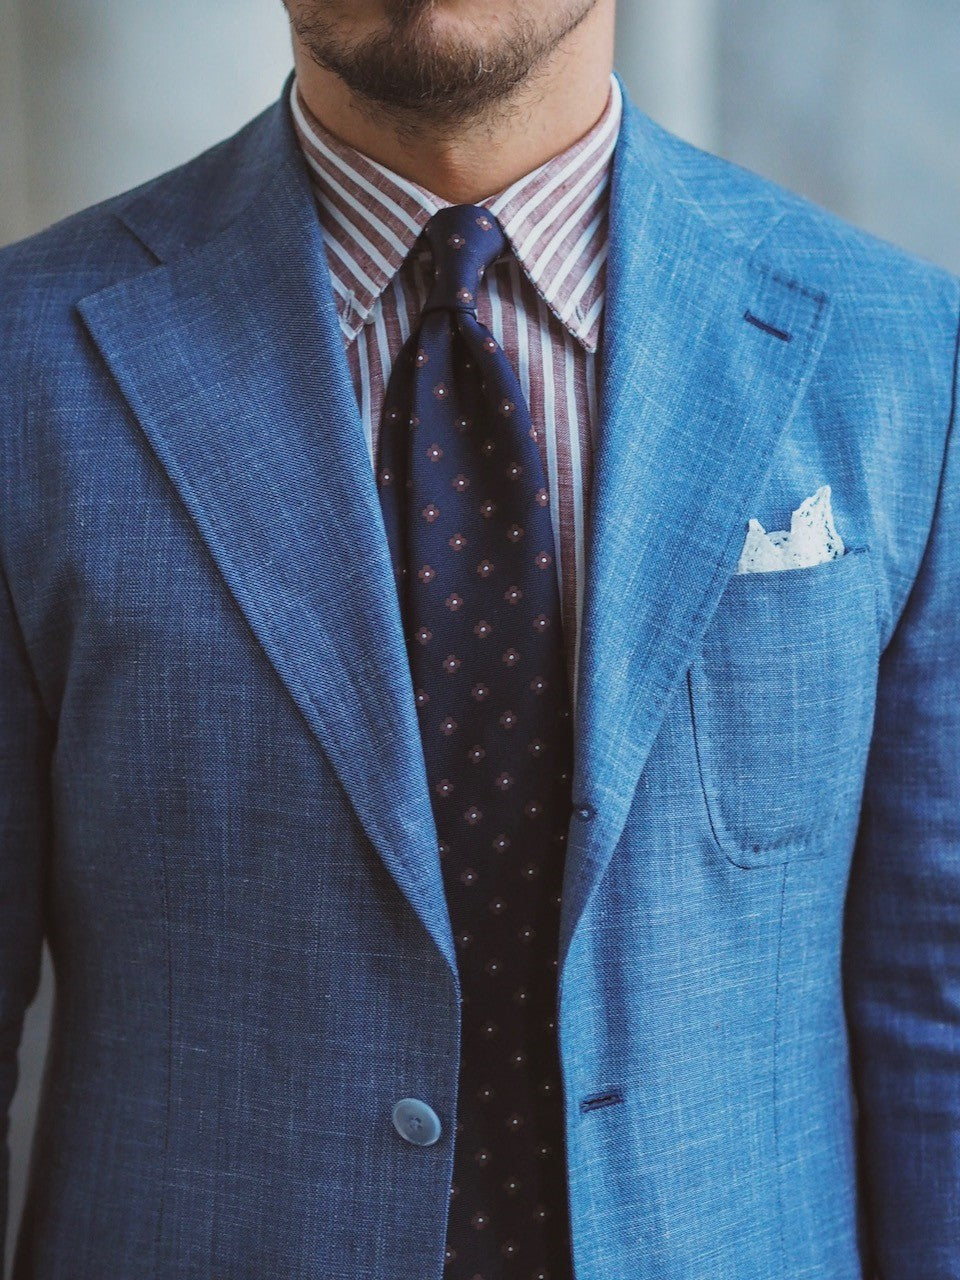 Light blue suit and striped shirt details